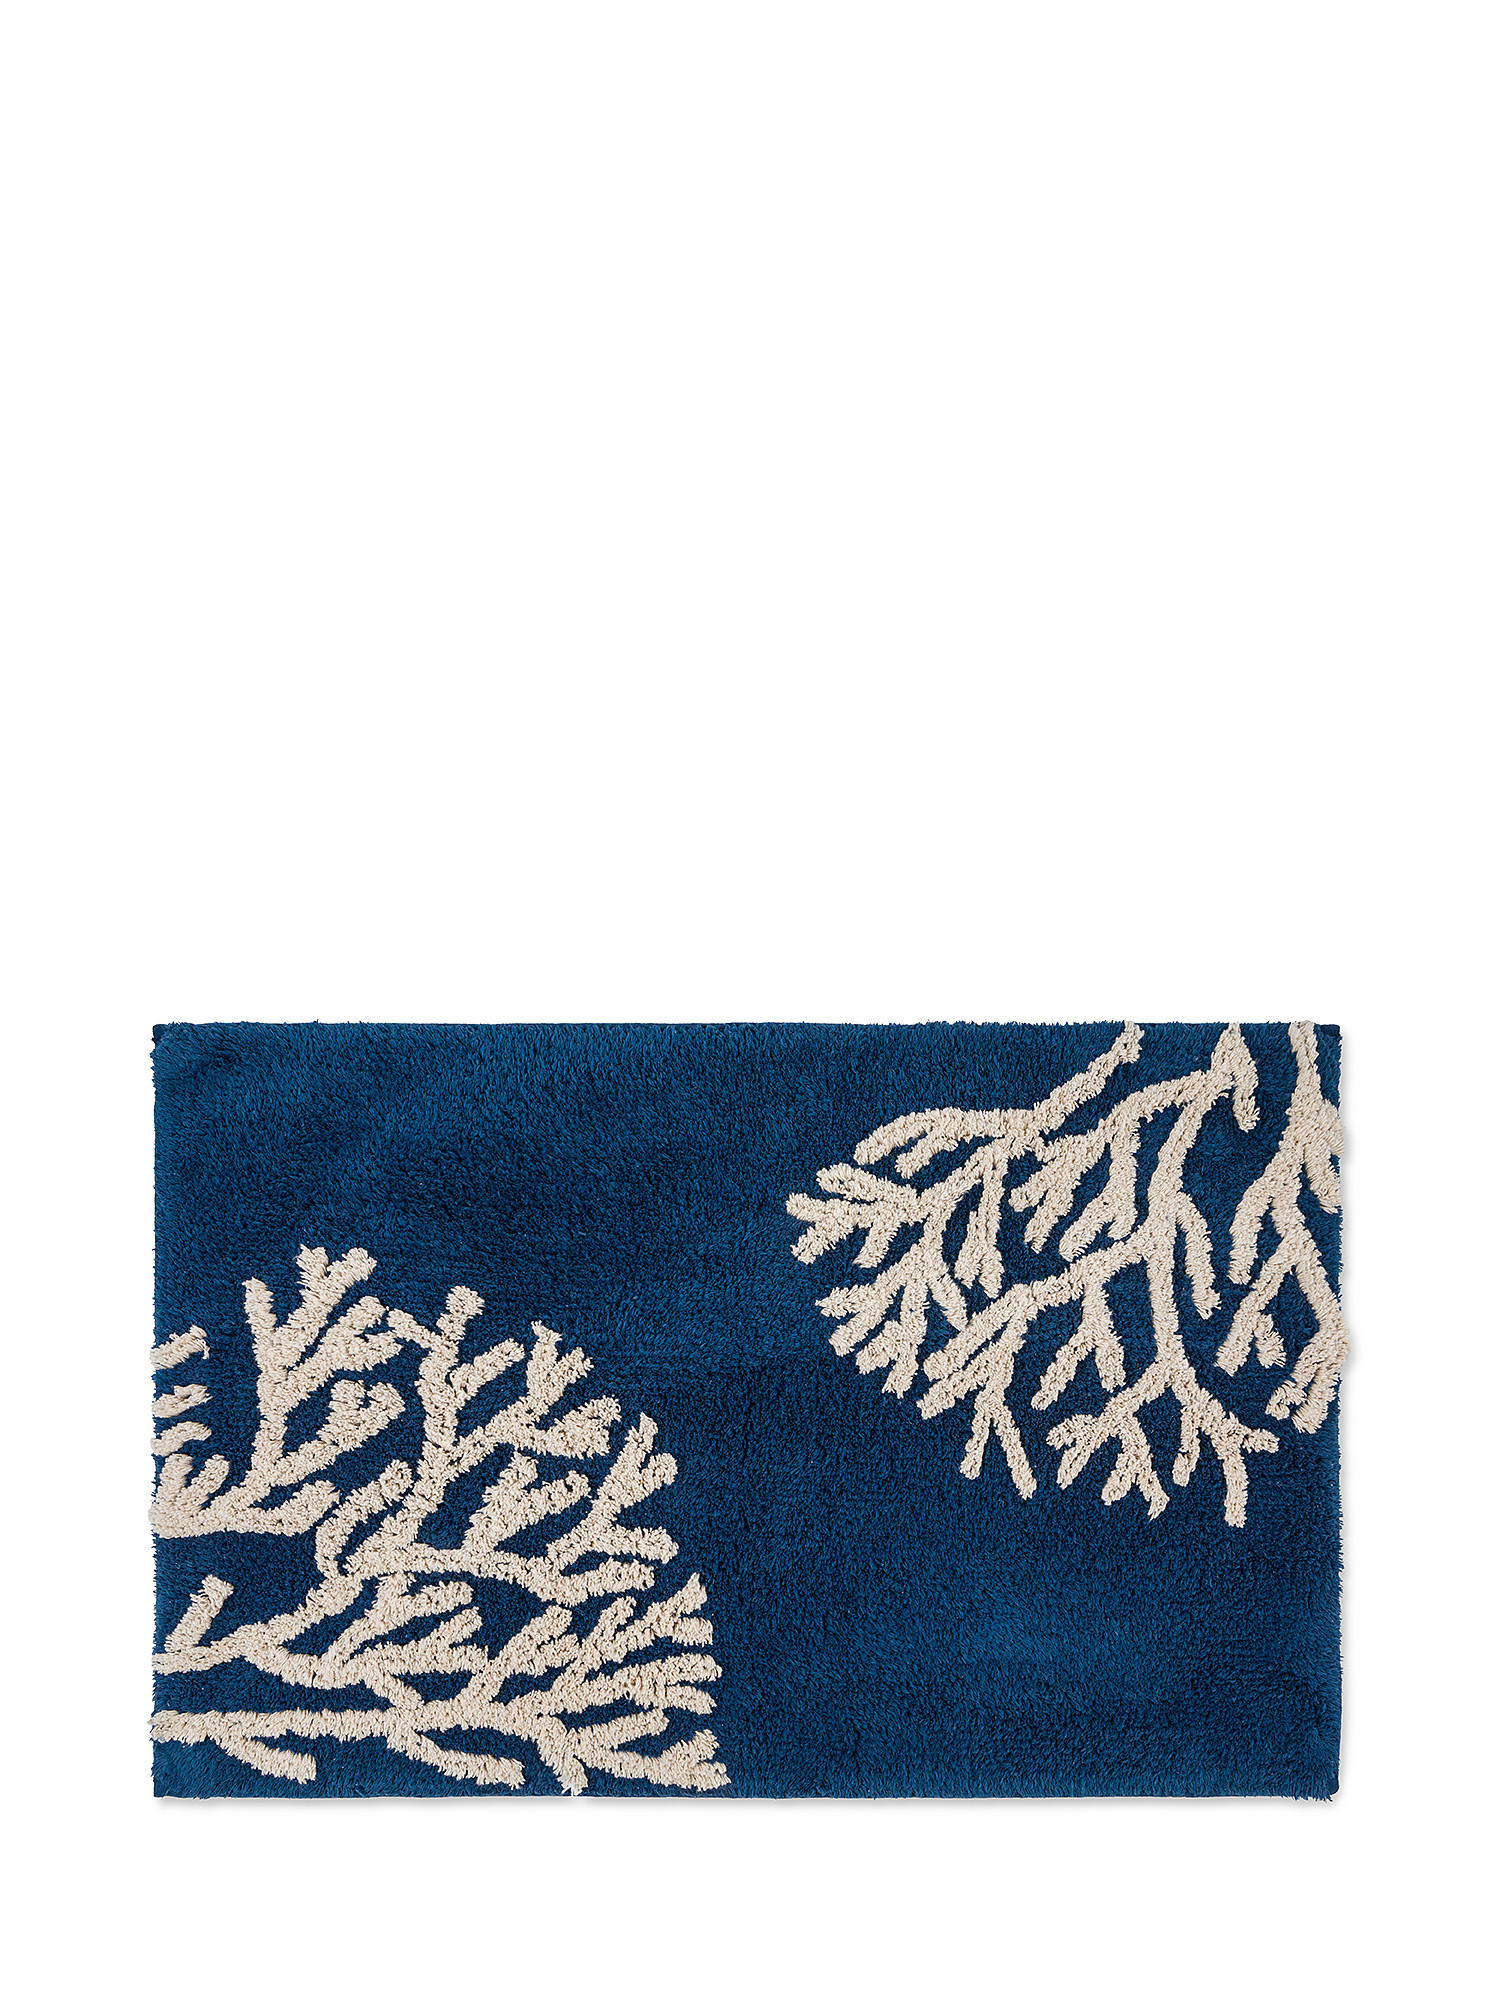 Tappeto bagno in cotone motivo coralli, Blu, large image number 0